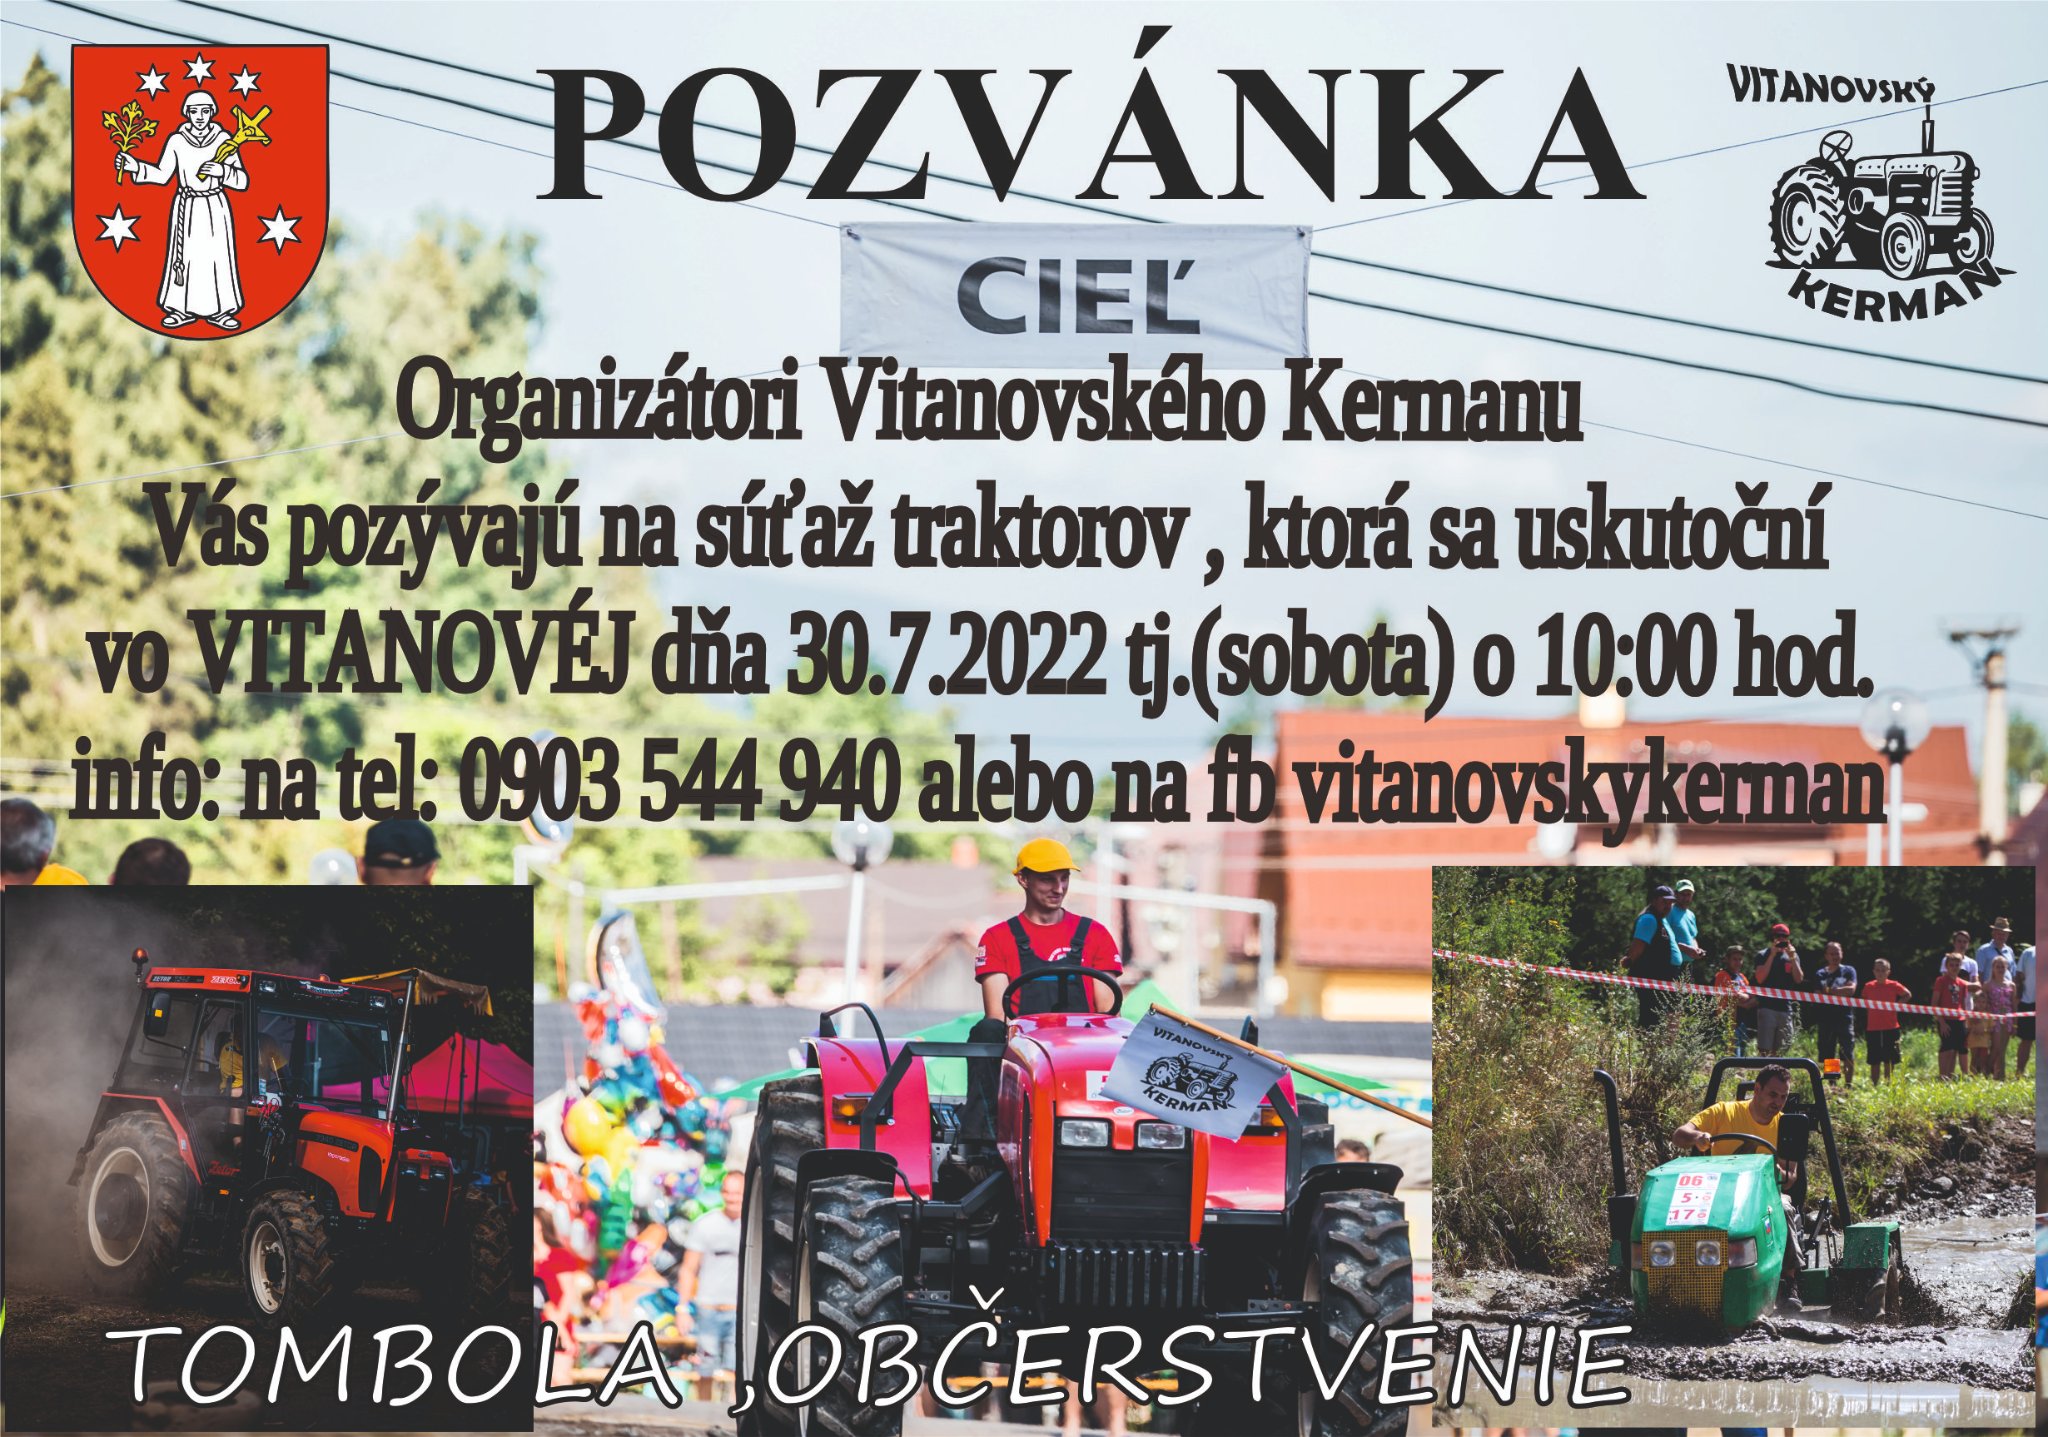 Vitanovsk kerman 2022 - 6. ronk sae traktorov